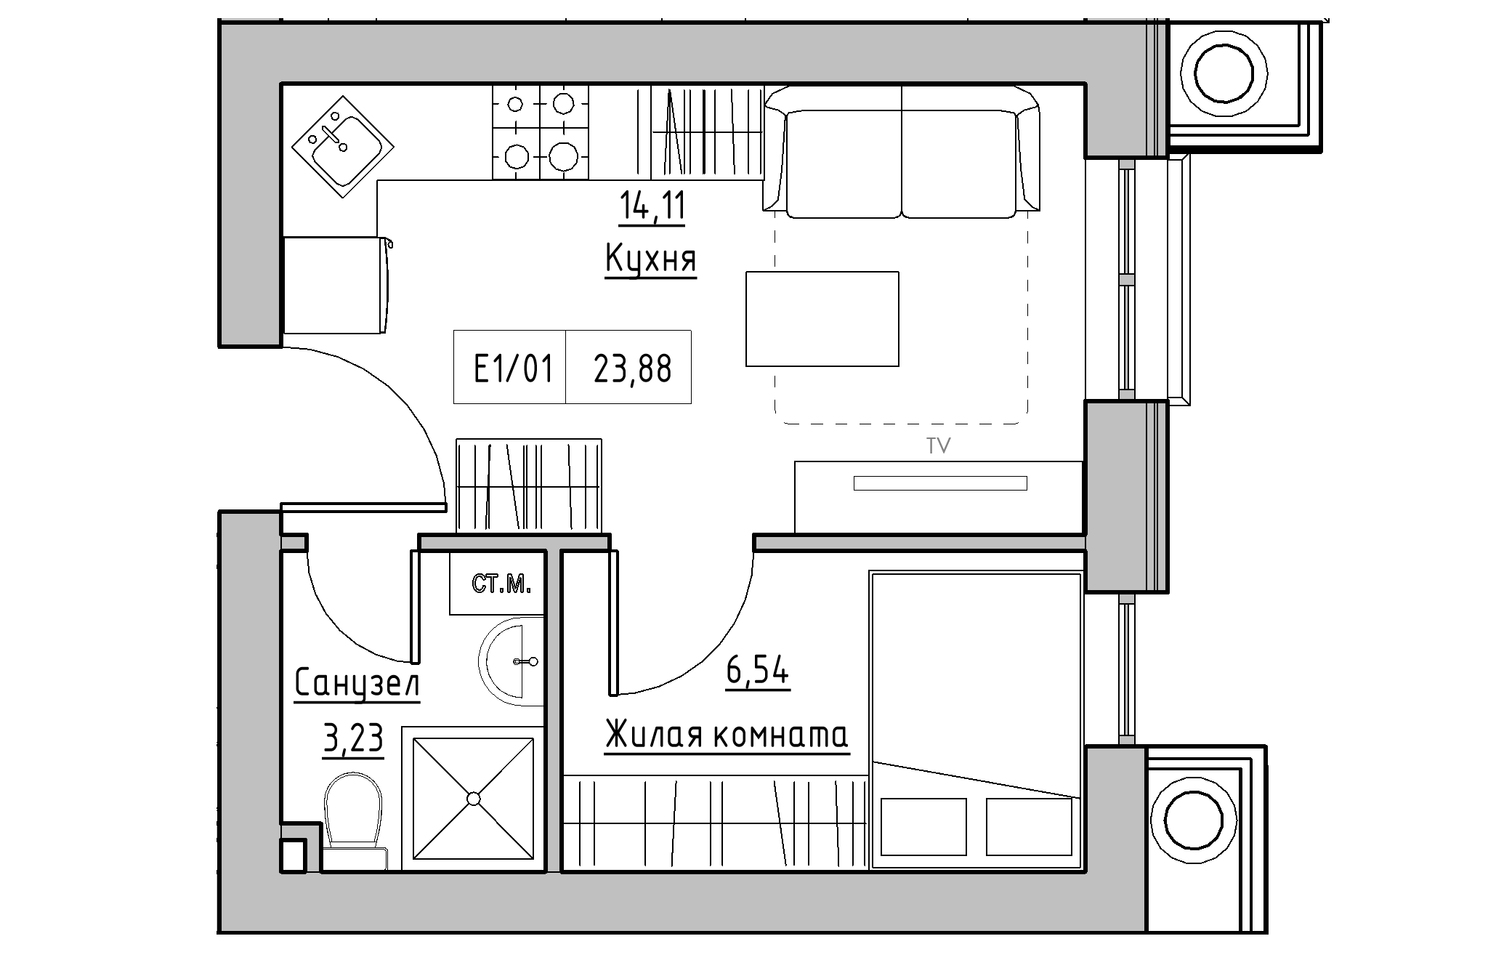 Planning 1-rm flats area 23.88m2, KS-010-05/0014.